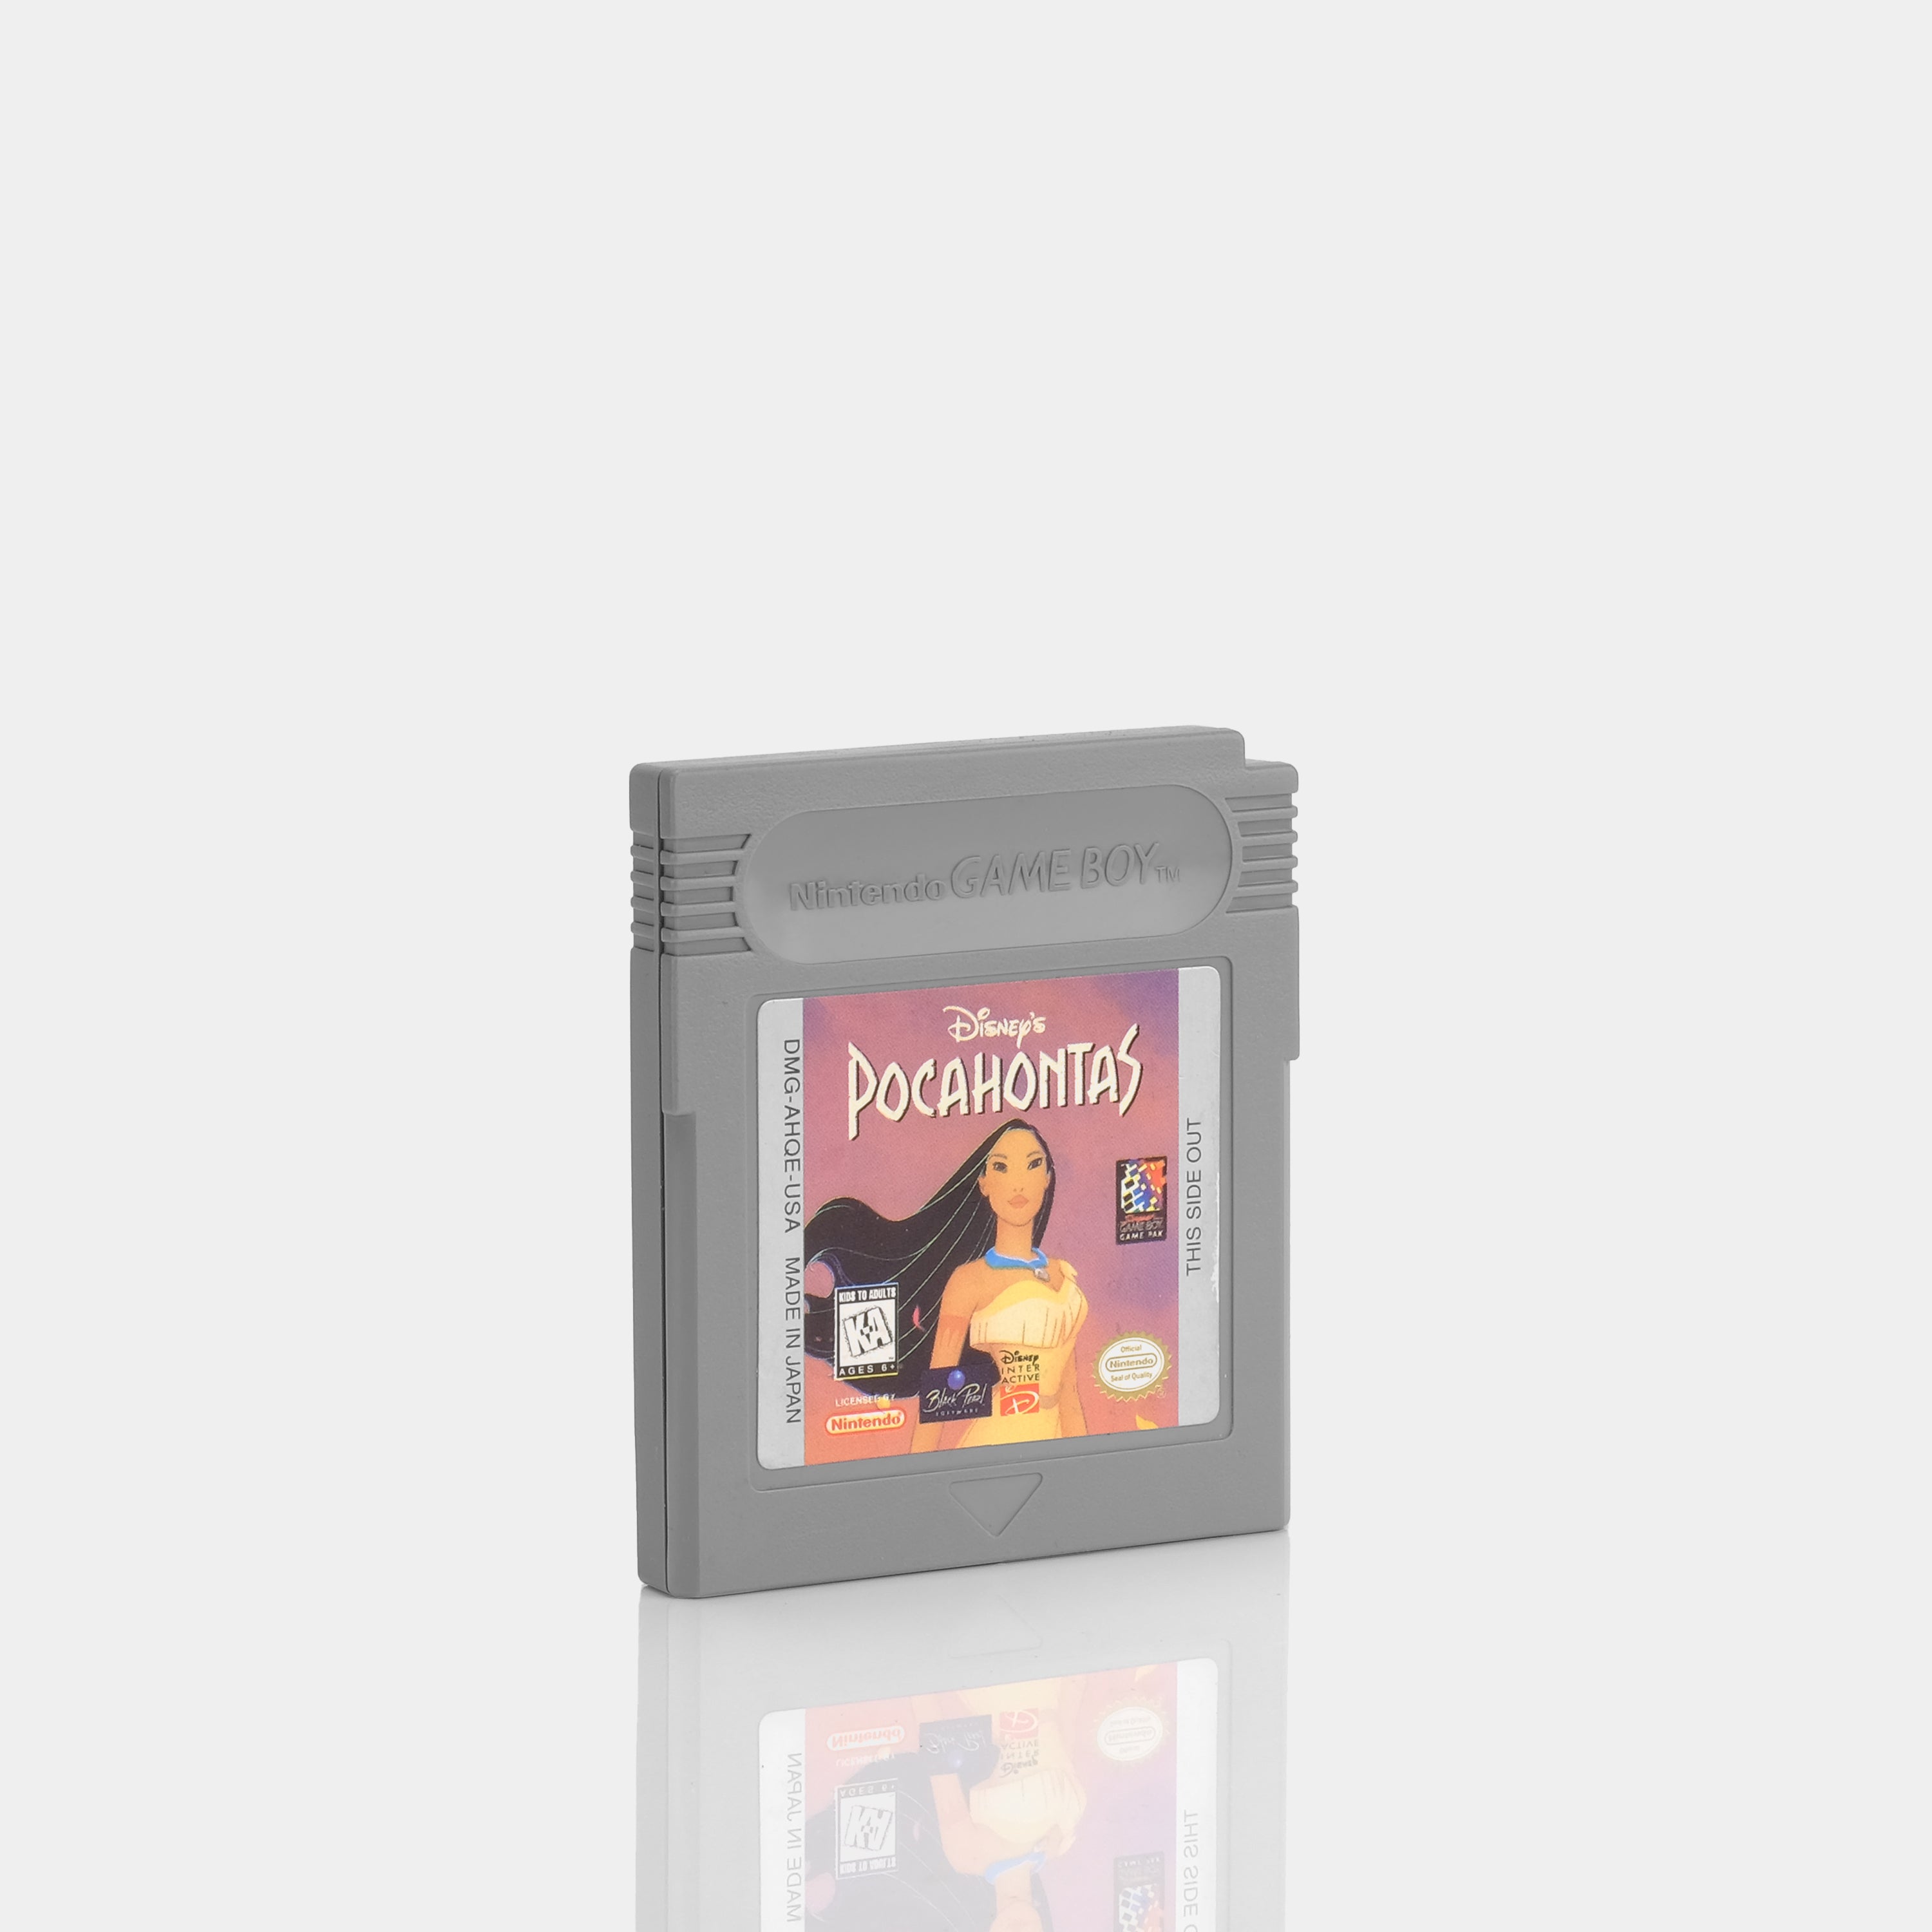 Disney's Pocahontas Game Boy Game